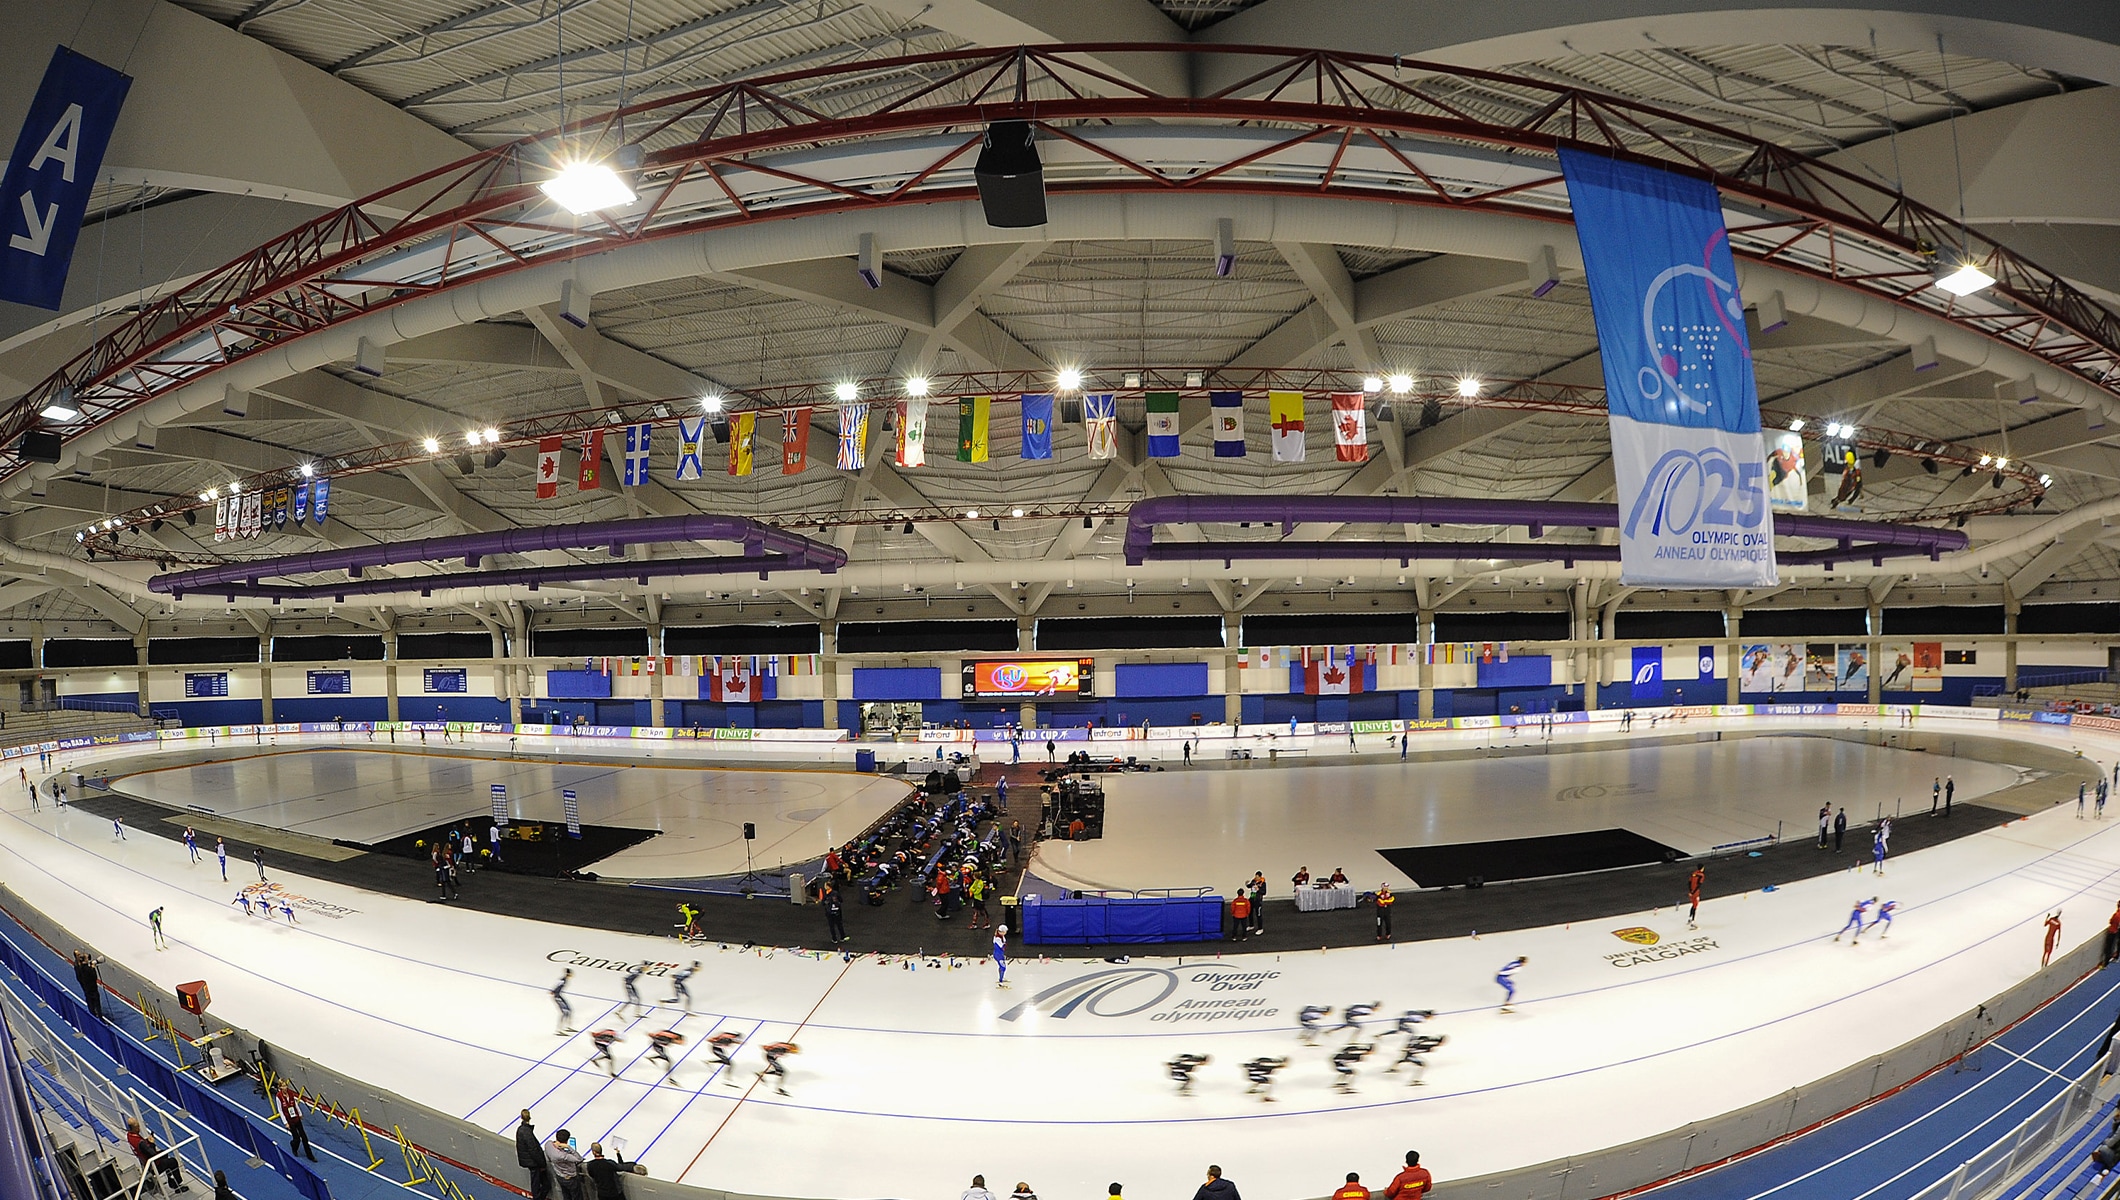 Calgary Olympic Oval - Olympic News